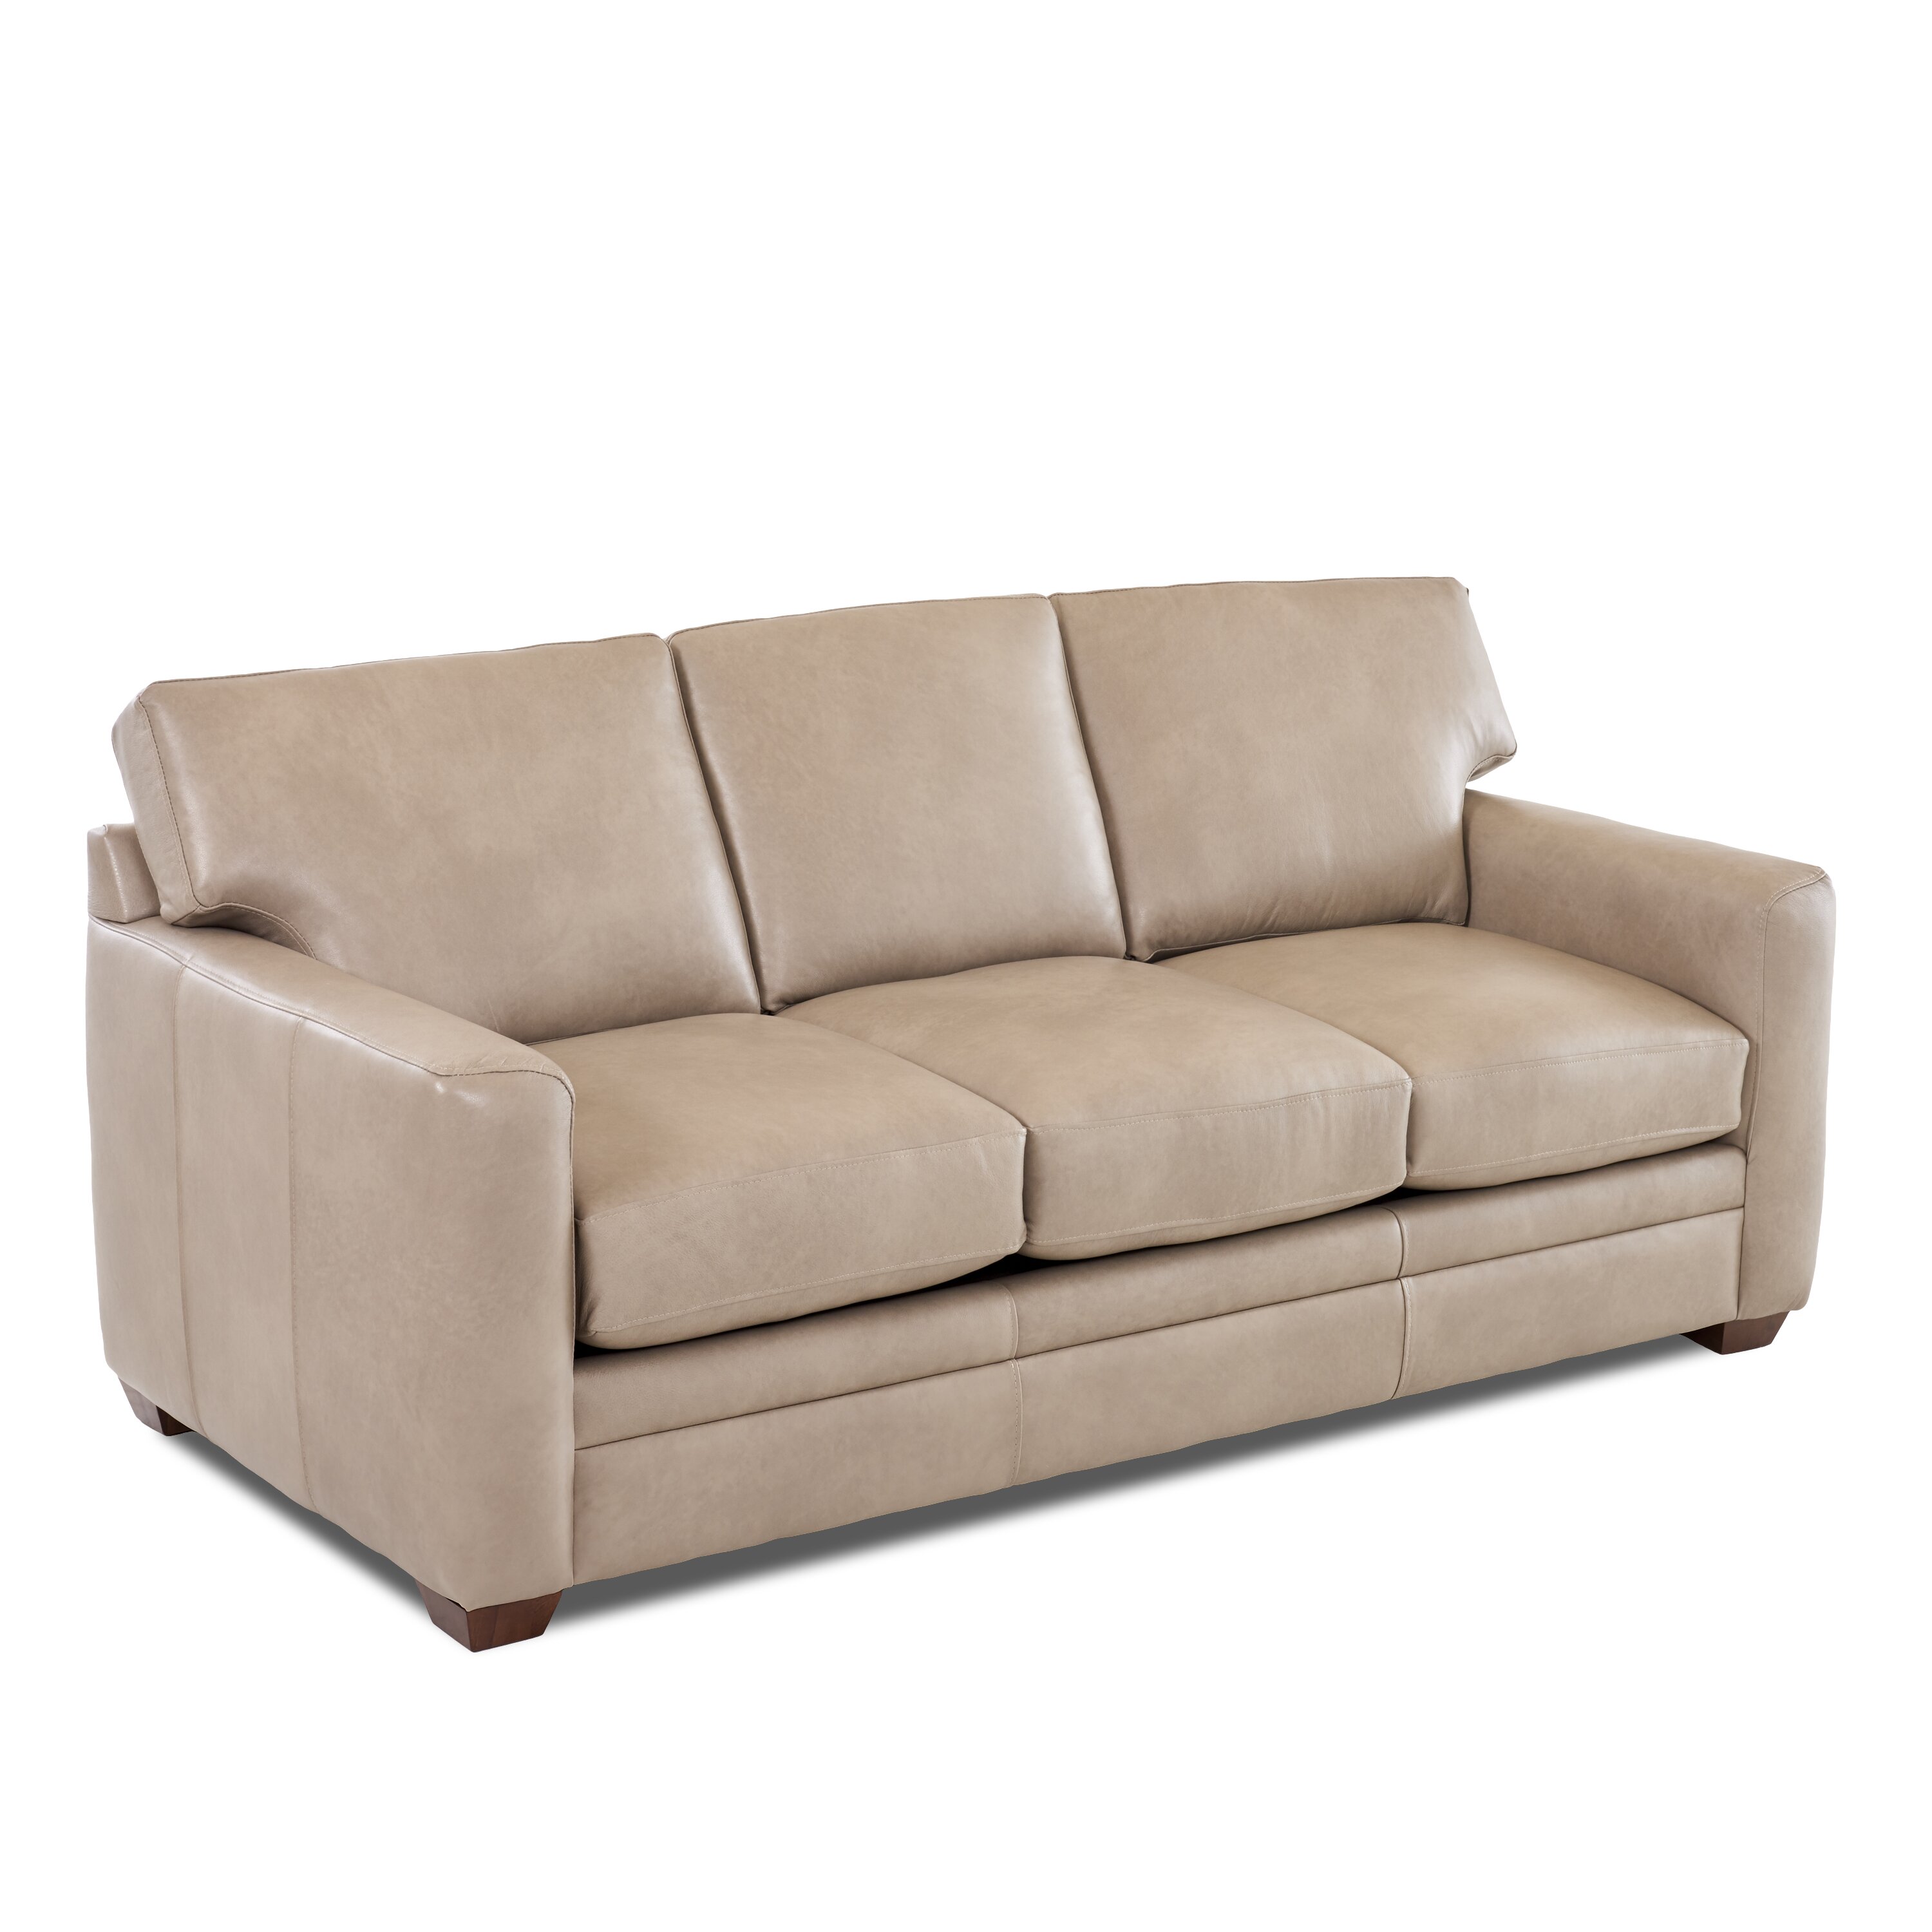 Wayfair Custom Upholstery Carleton Leather Sofa Reviews 